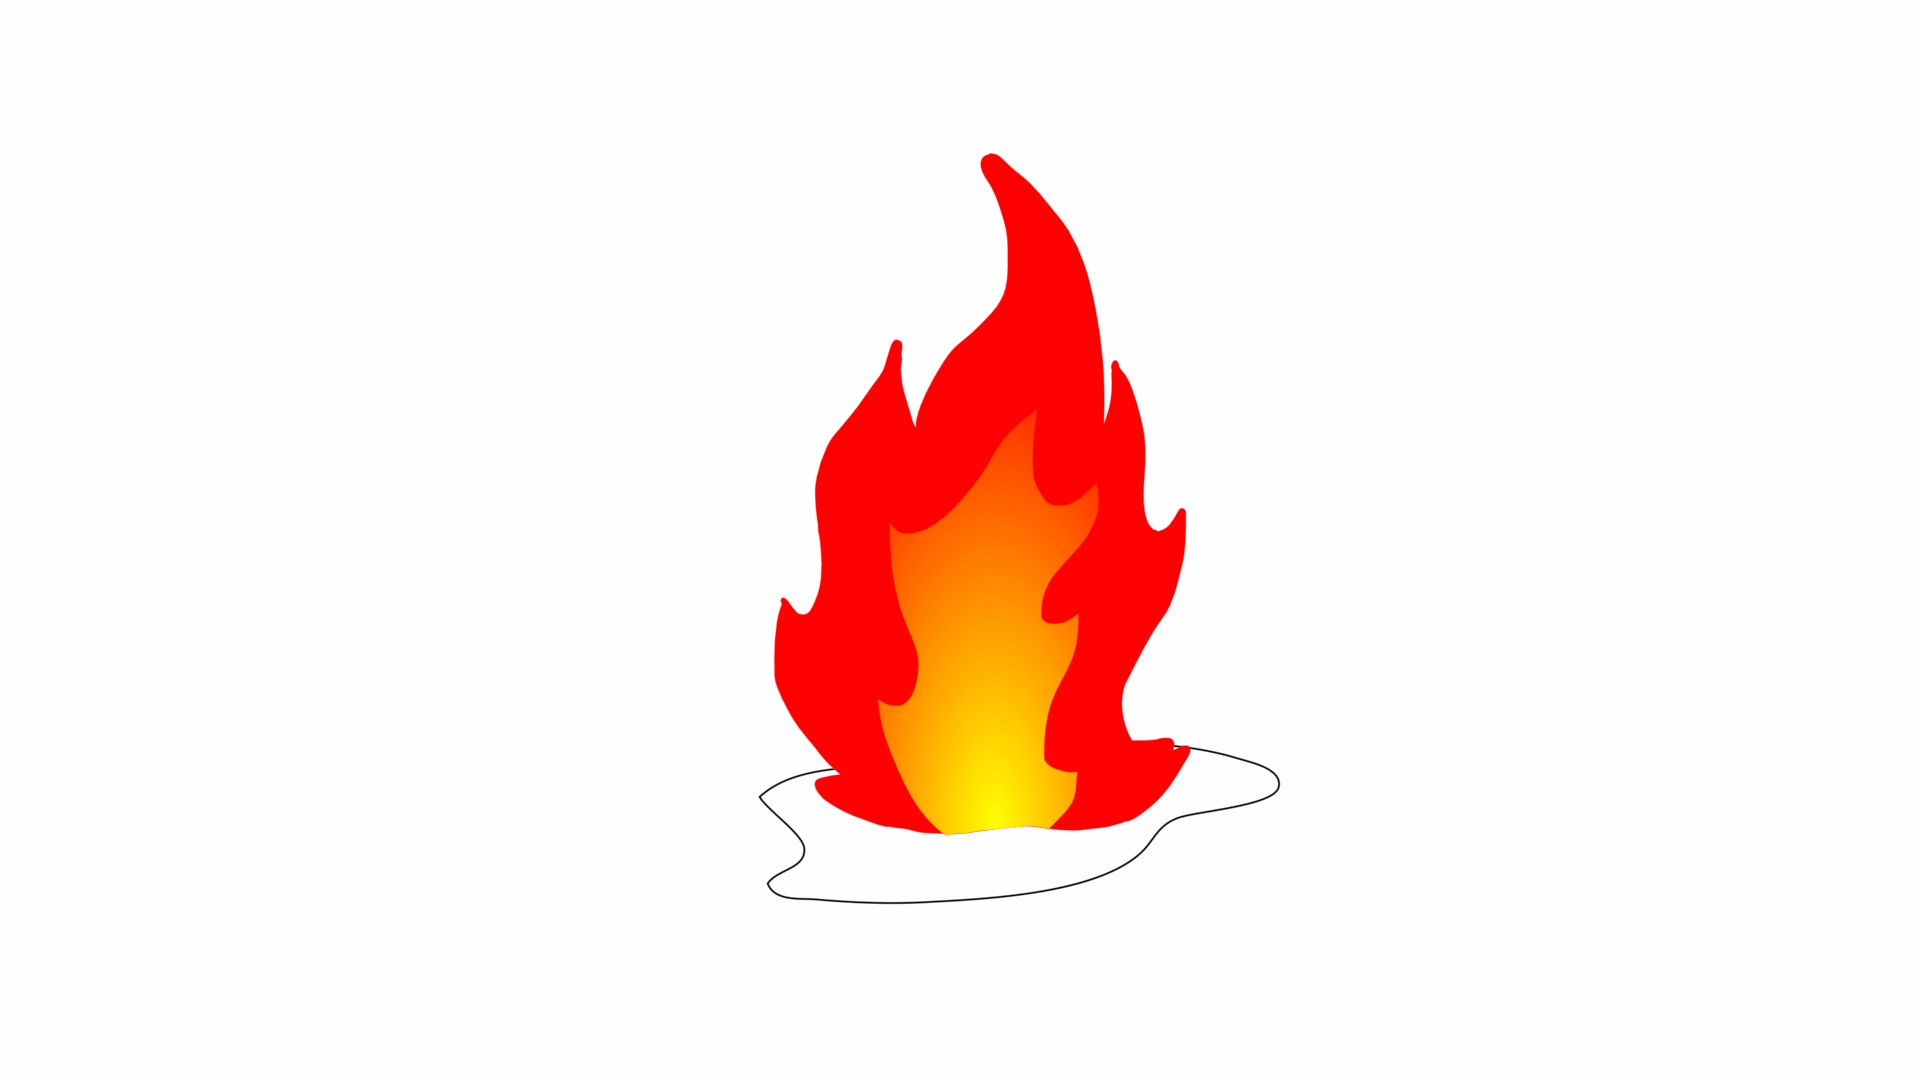 ArtStation - Quick Fire Animation